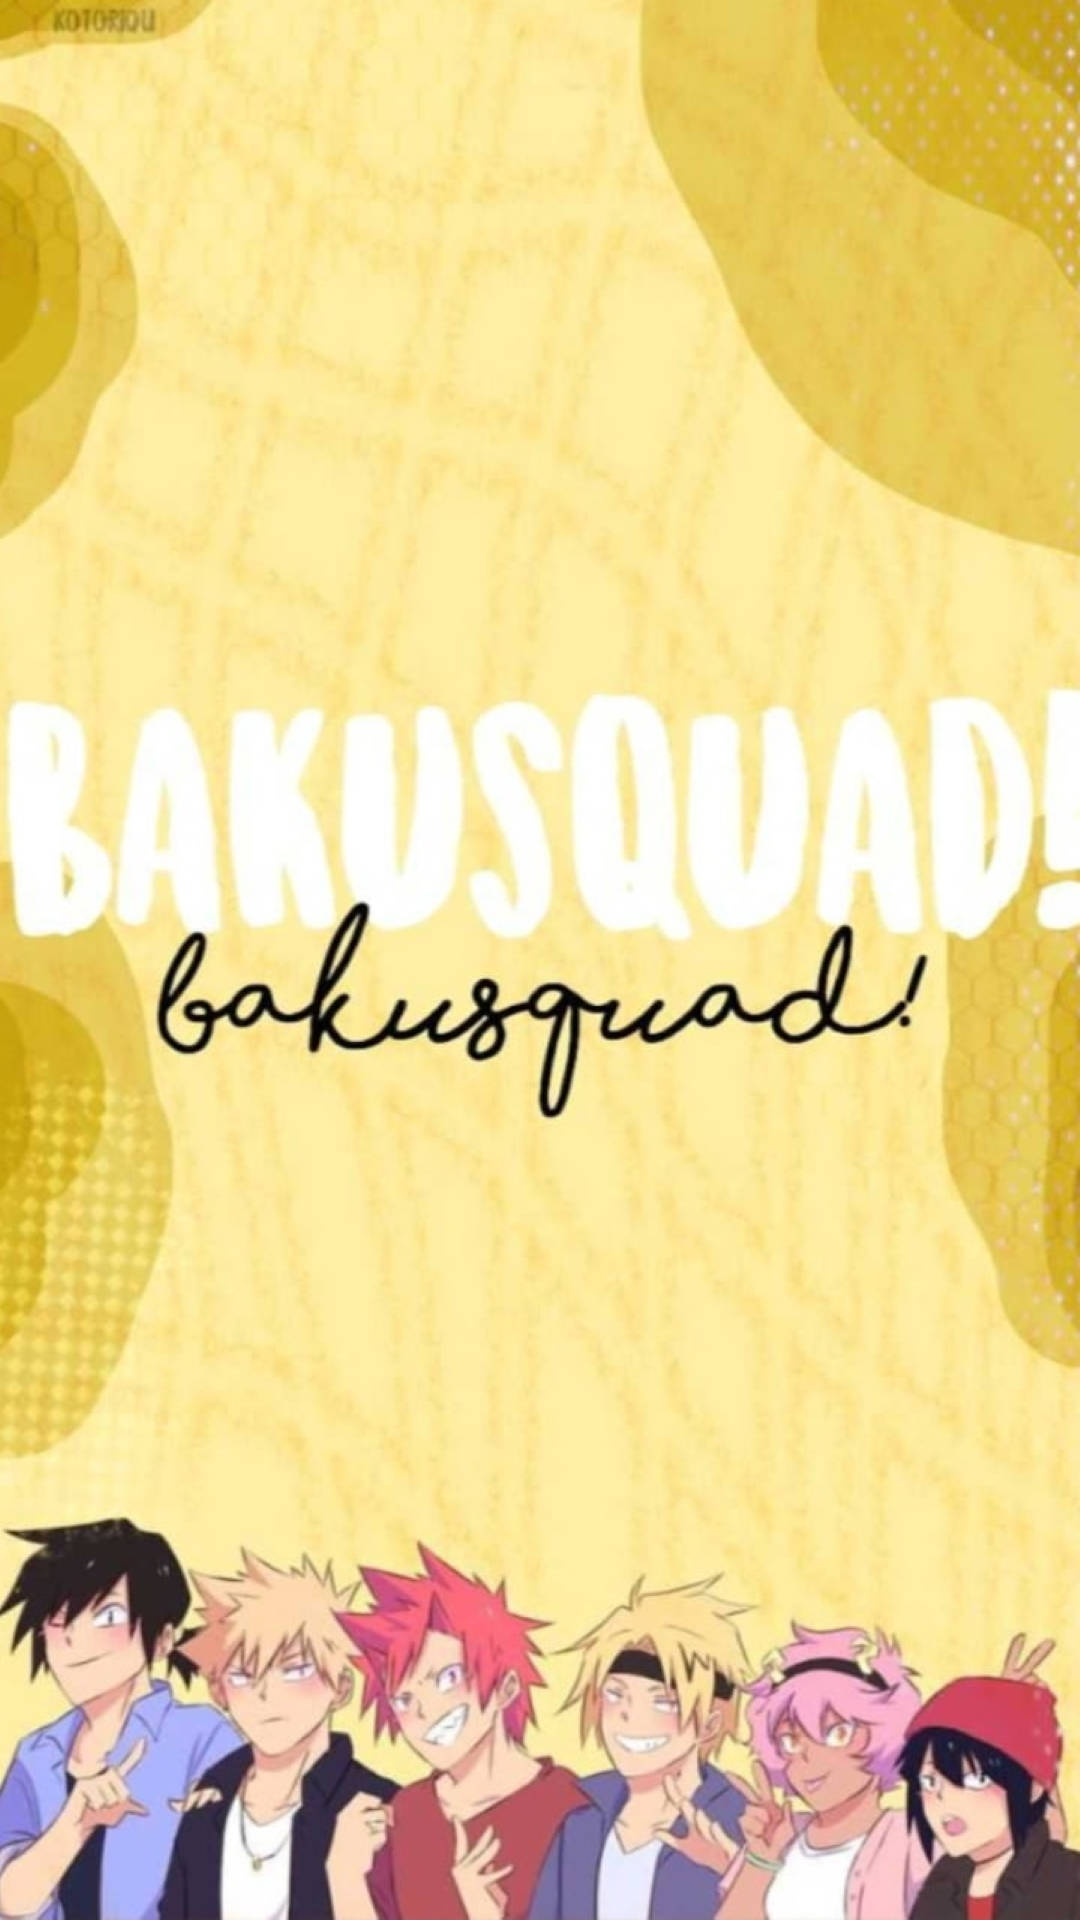 Bakusquad Yellow Art